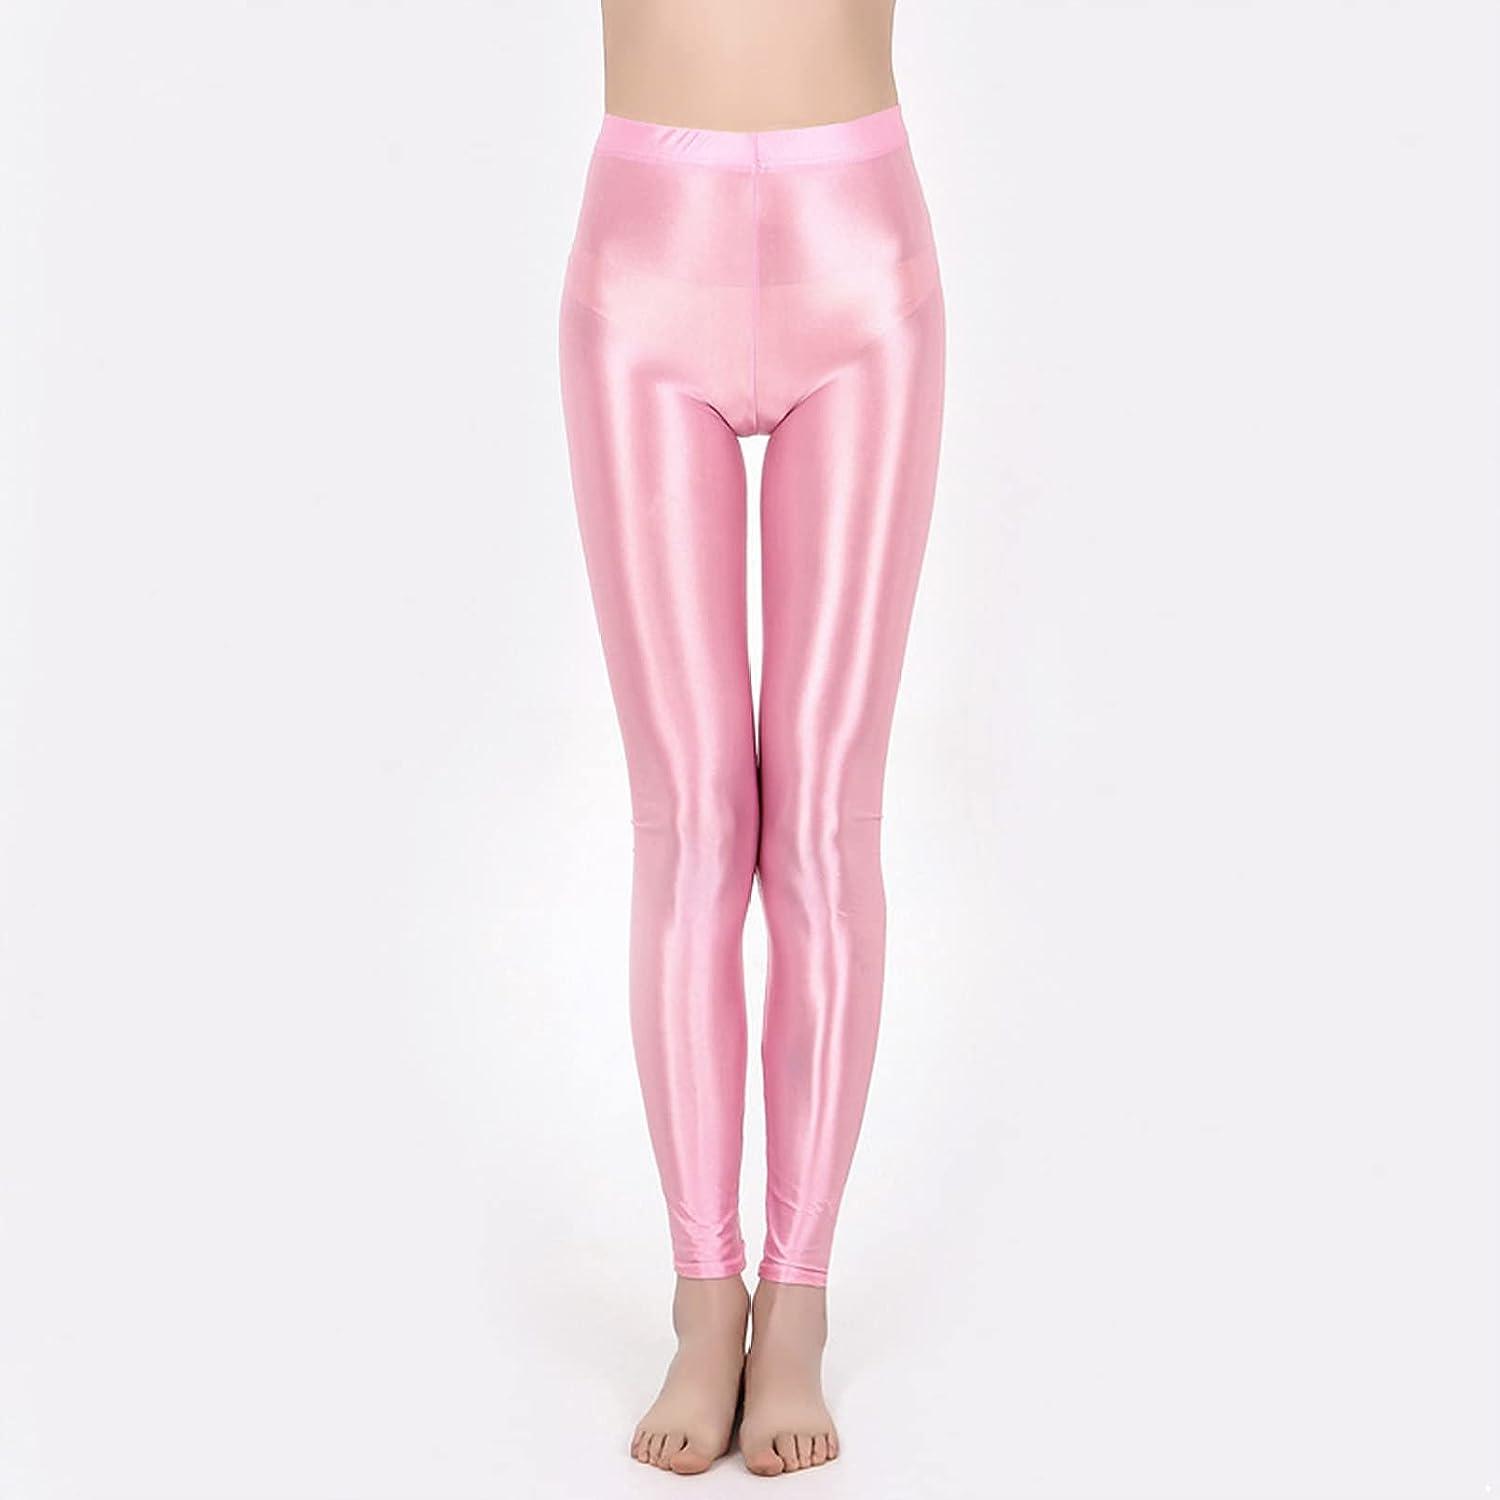 YONGHS Women's High Waist Shiny Metallic Stretchy Leggings Tights Pants  Rave Dance Bottoms Clubwear Pink a Medium